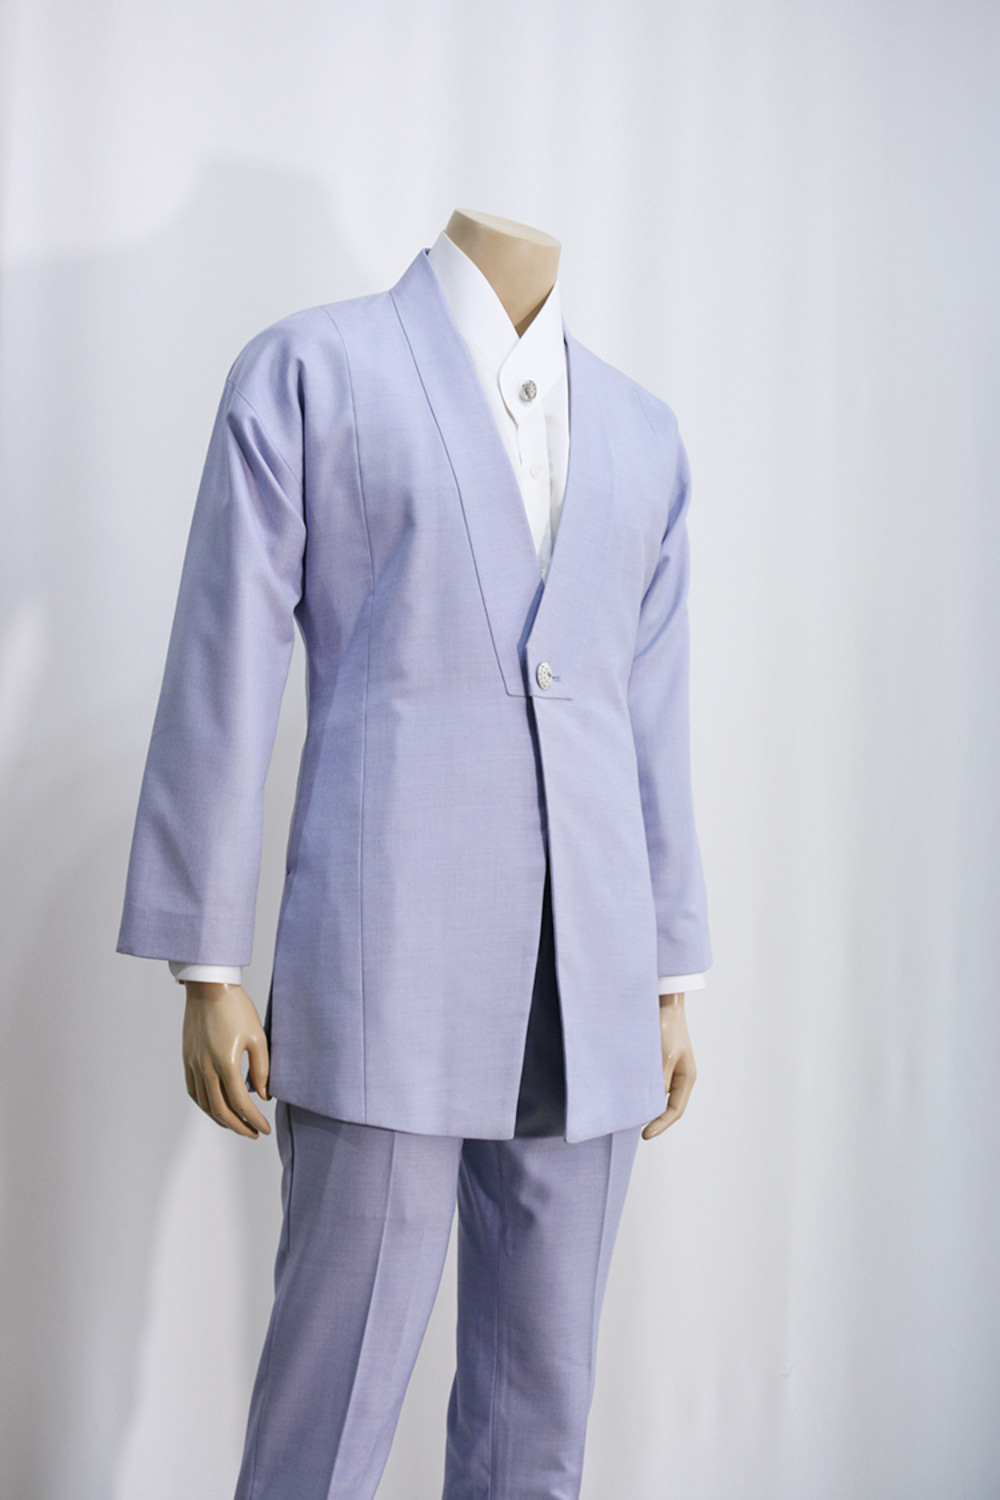 [Rental] Lavender Facing Collar Hanbok Suit Setup